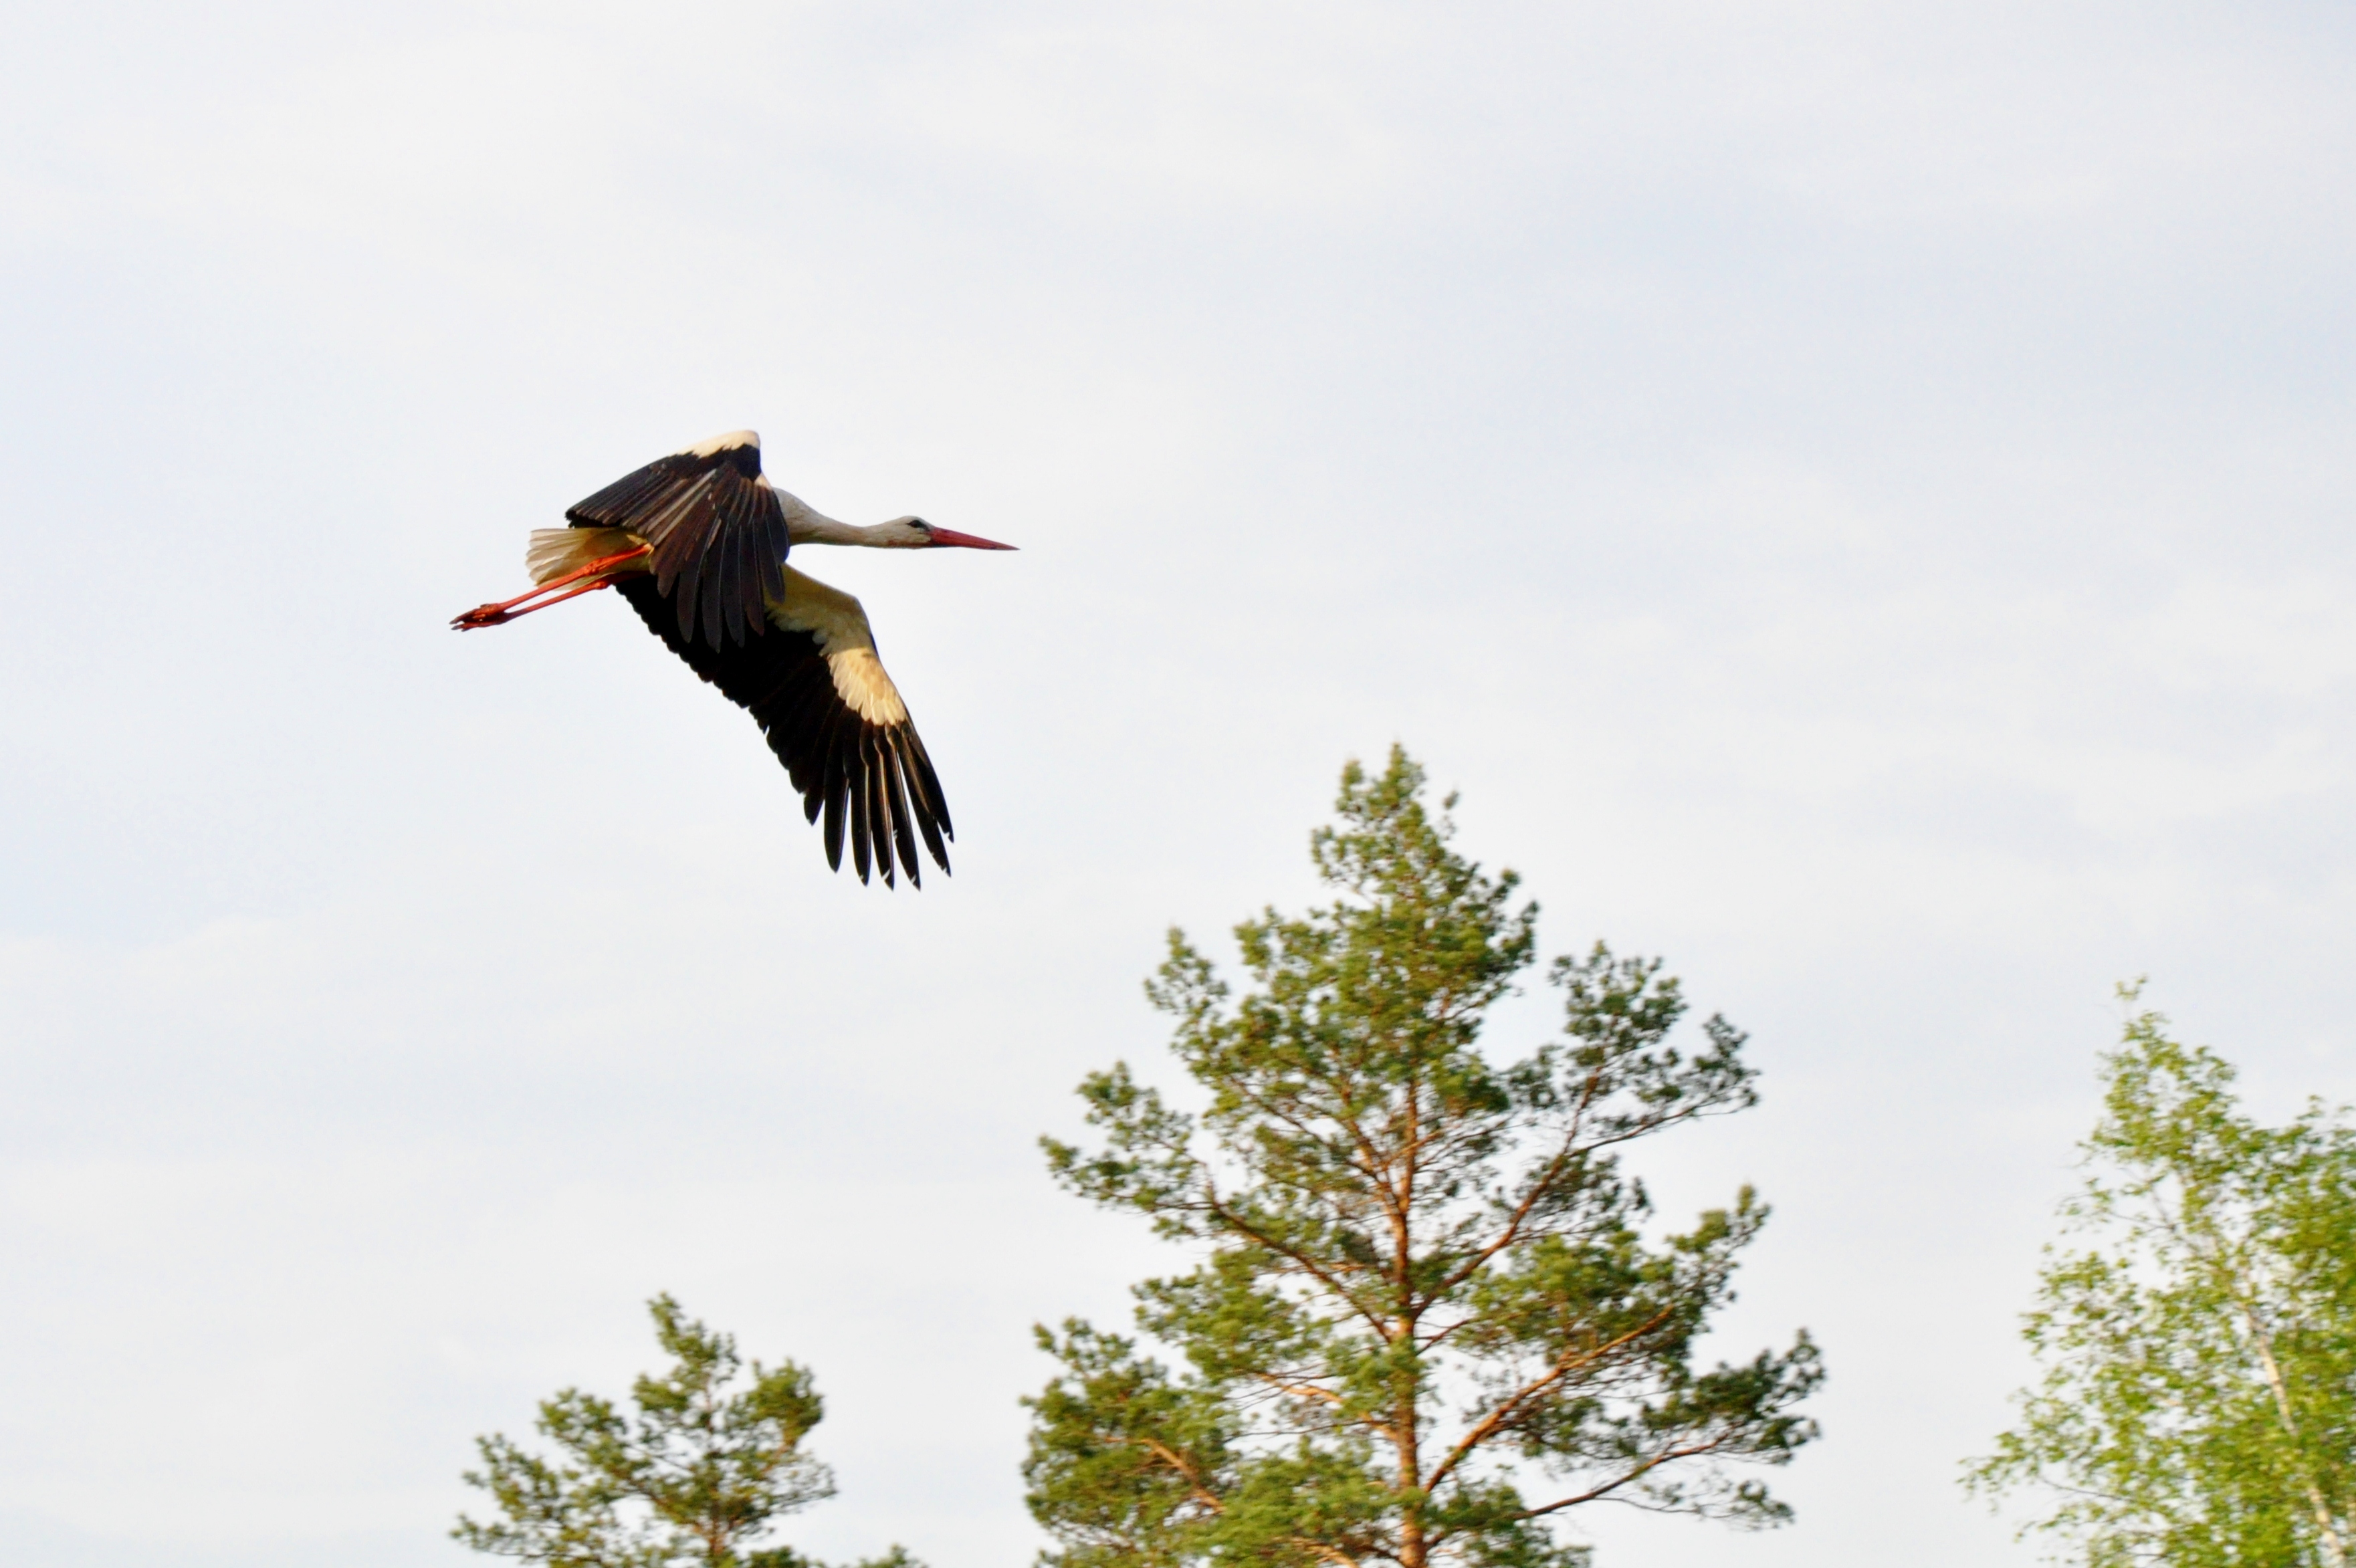 Lietuva 4: Stork-Spotting